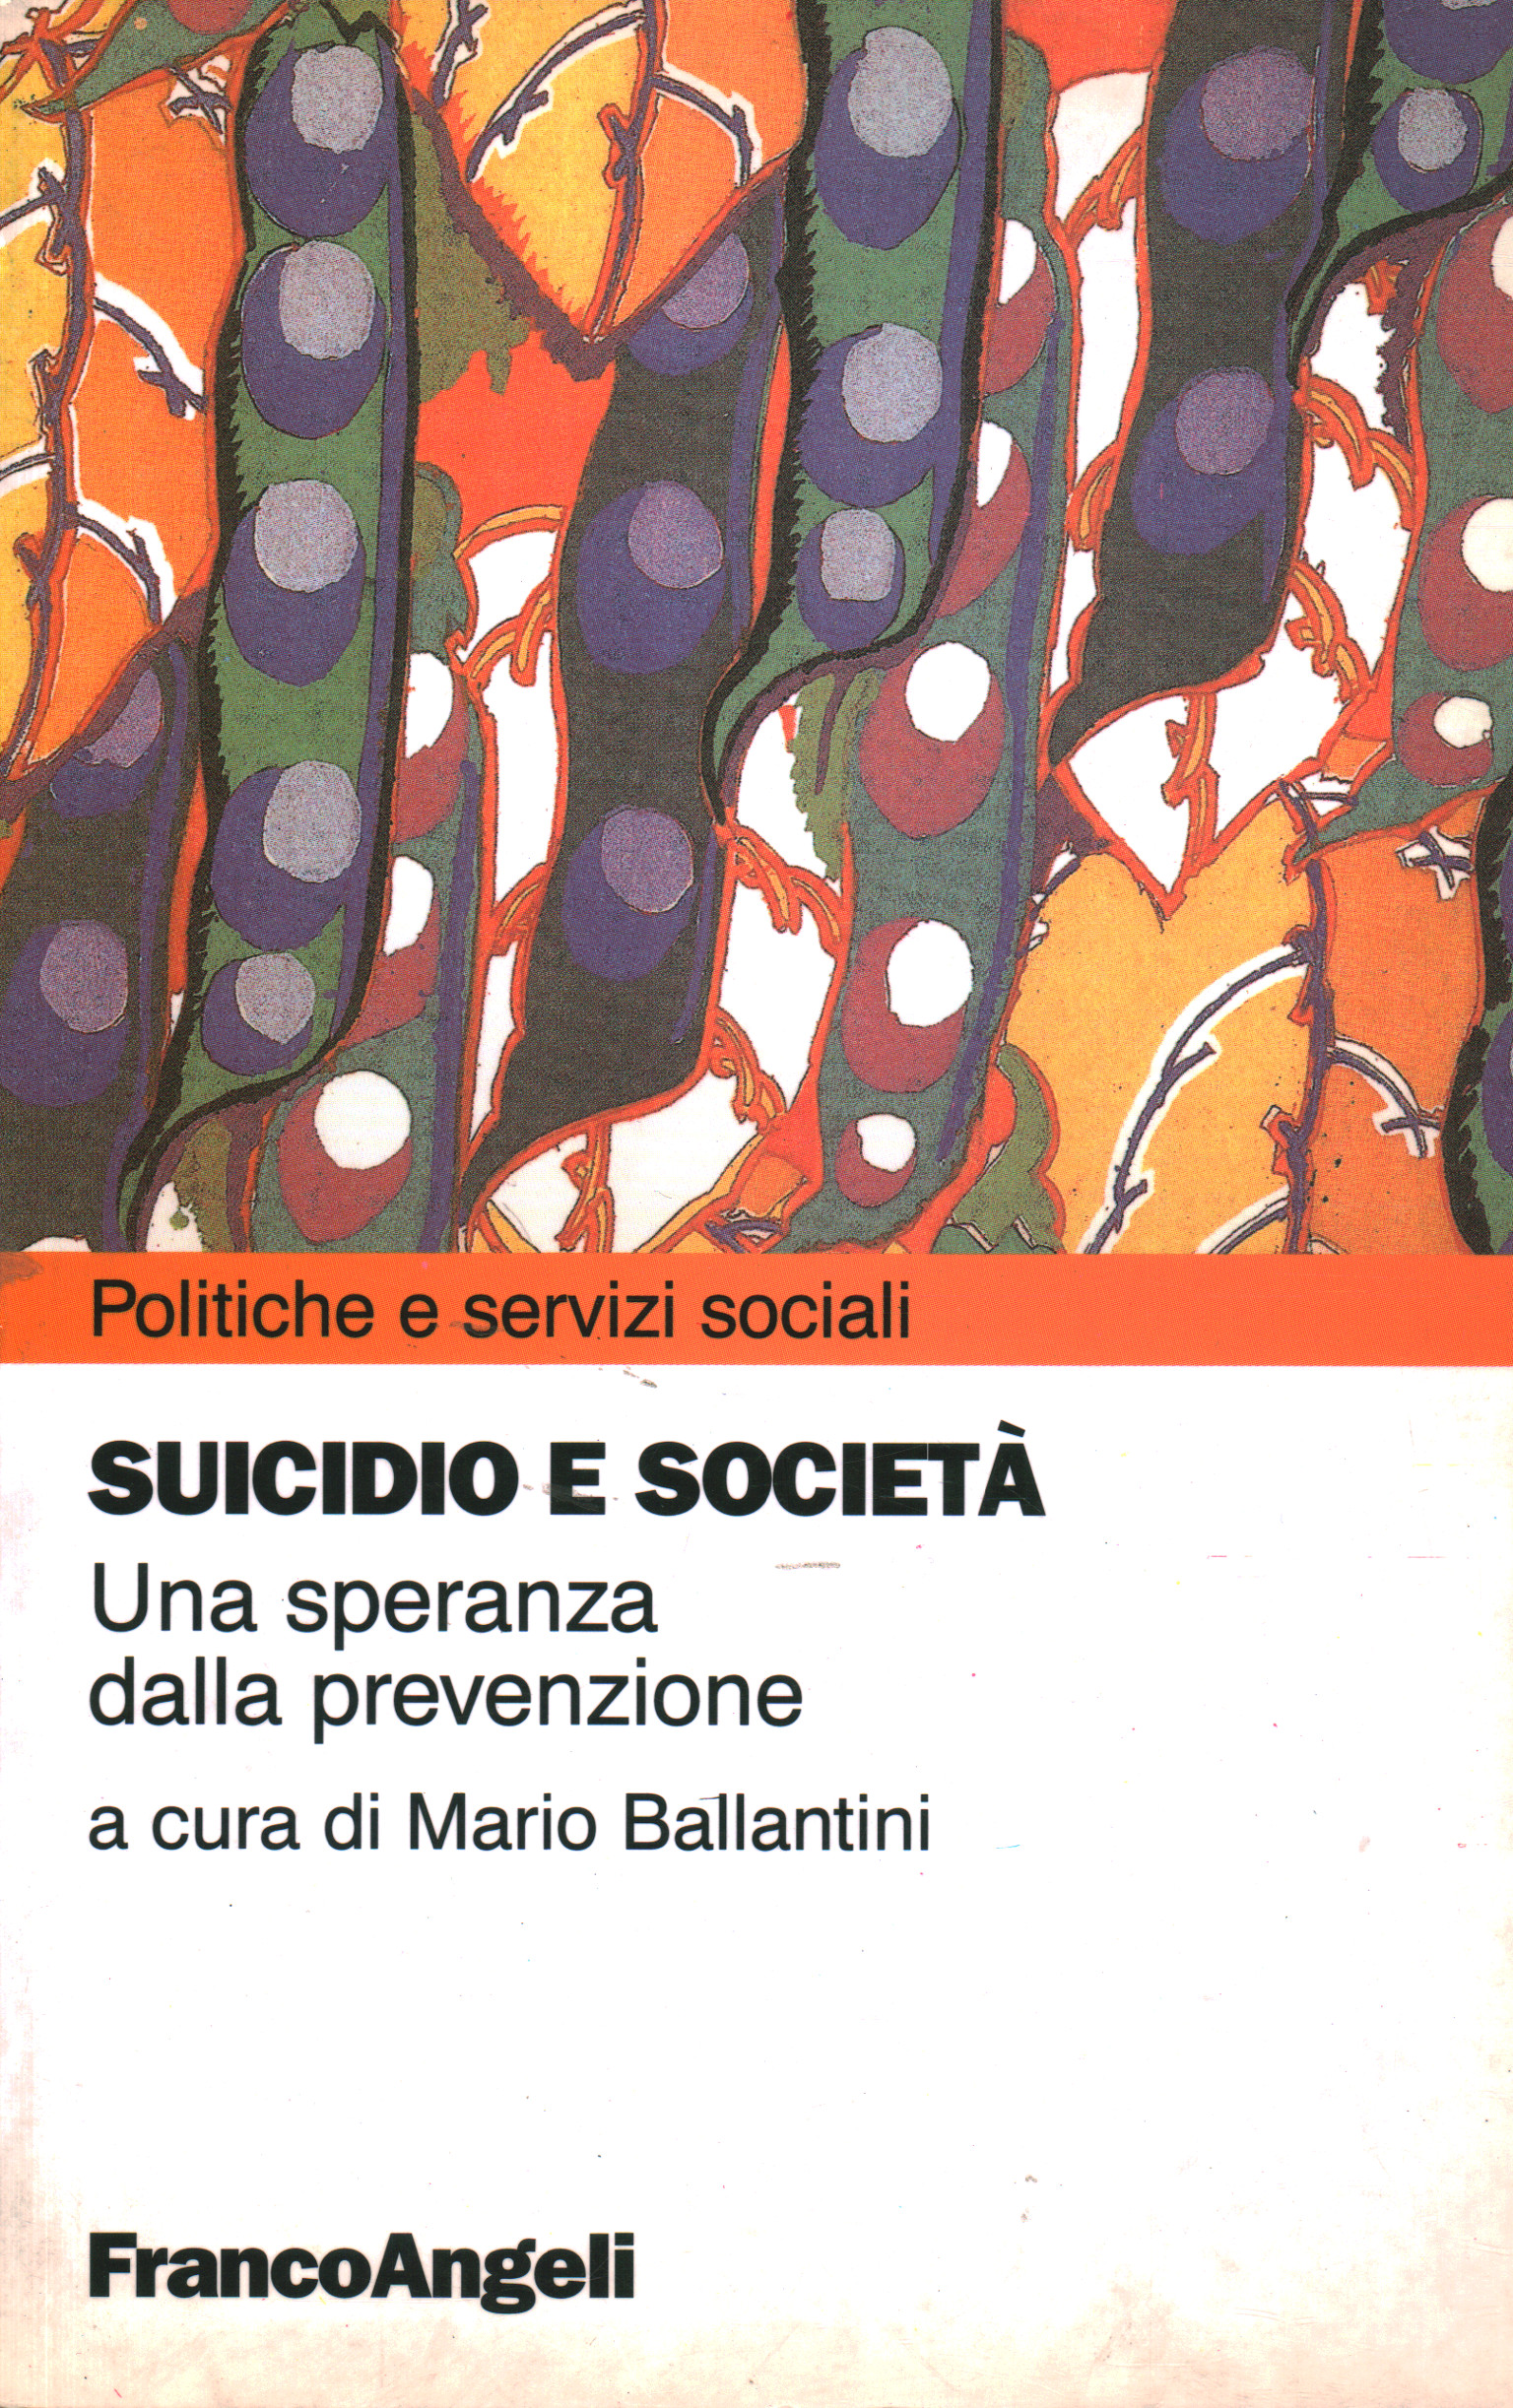 Suicide and society, Mario Ballantini